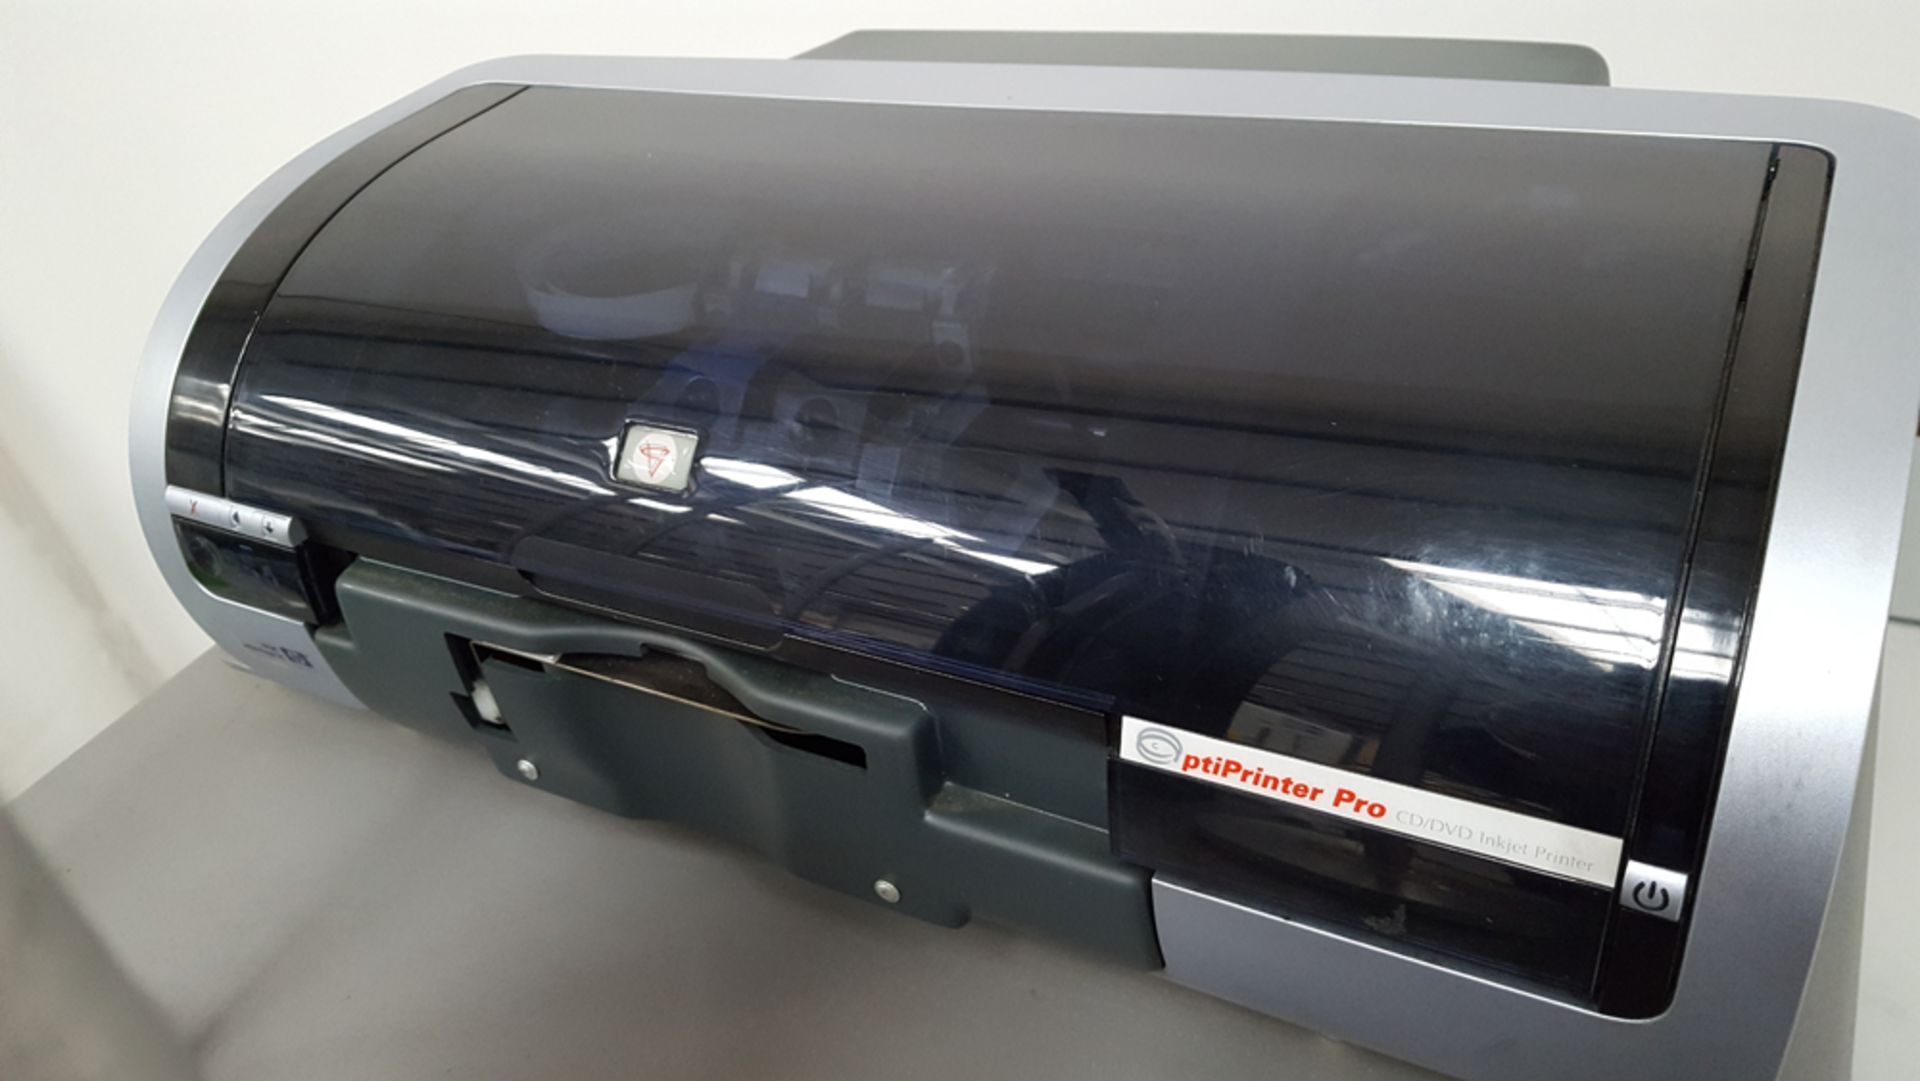 CopyDisc label printer and robotic arm x 2 (Ref: WA11784) - Image 4 of 10